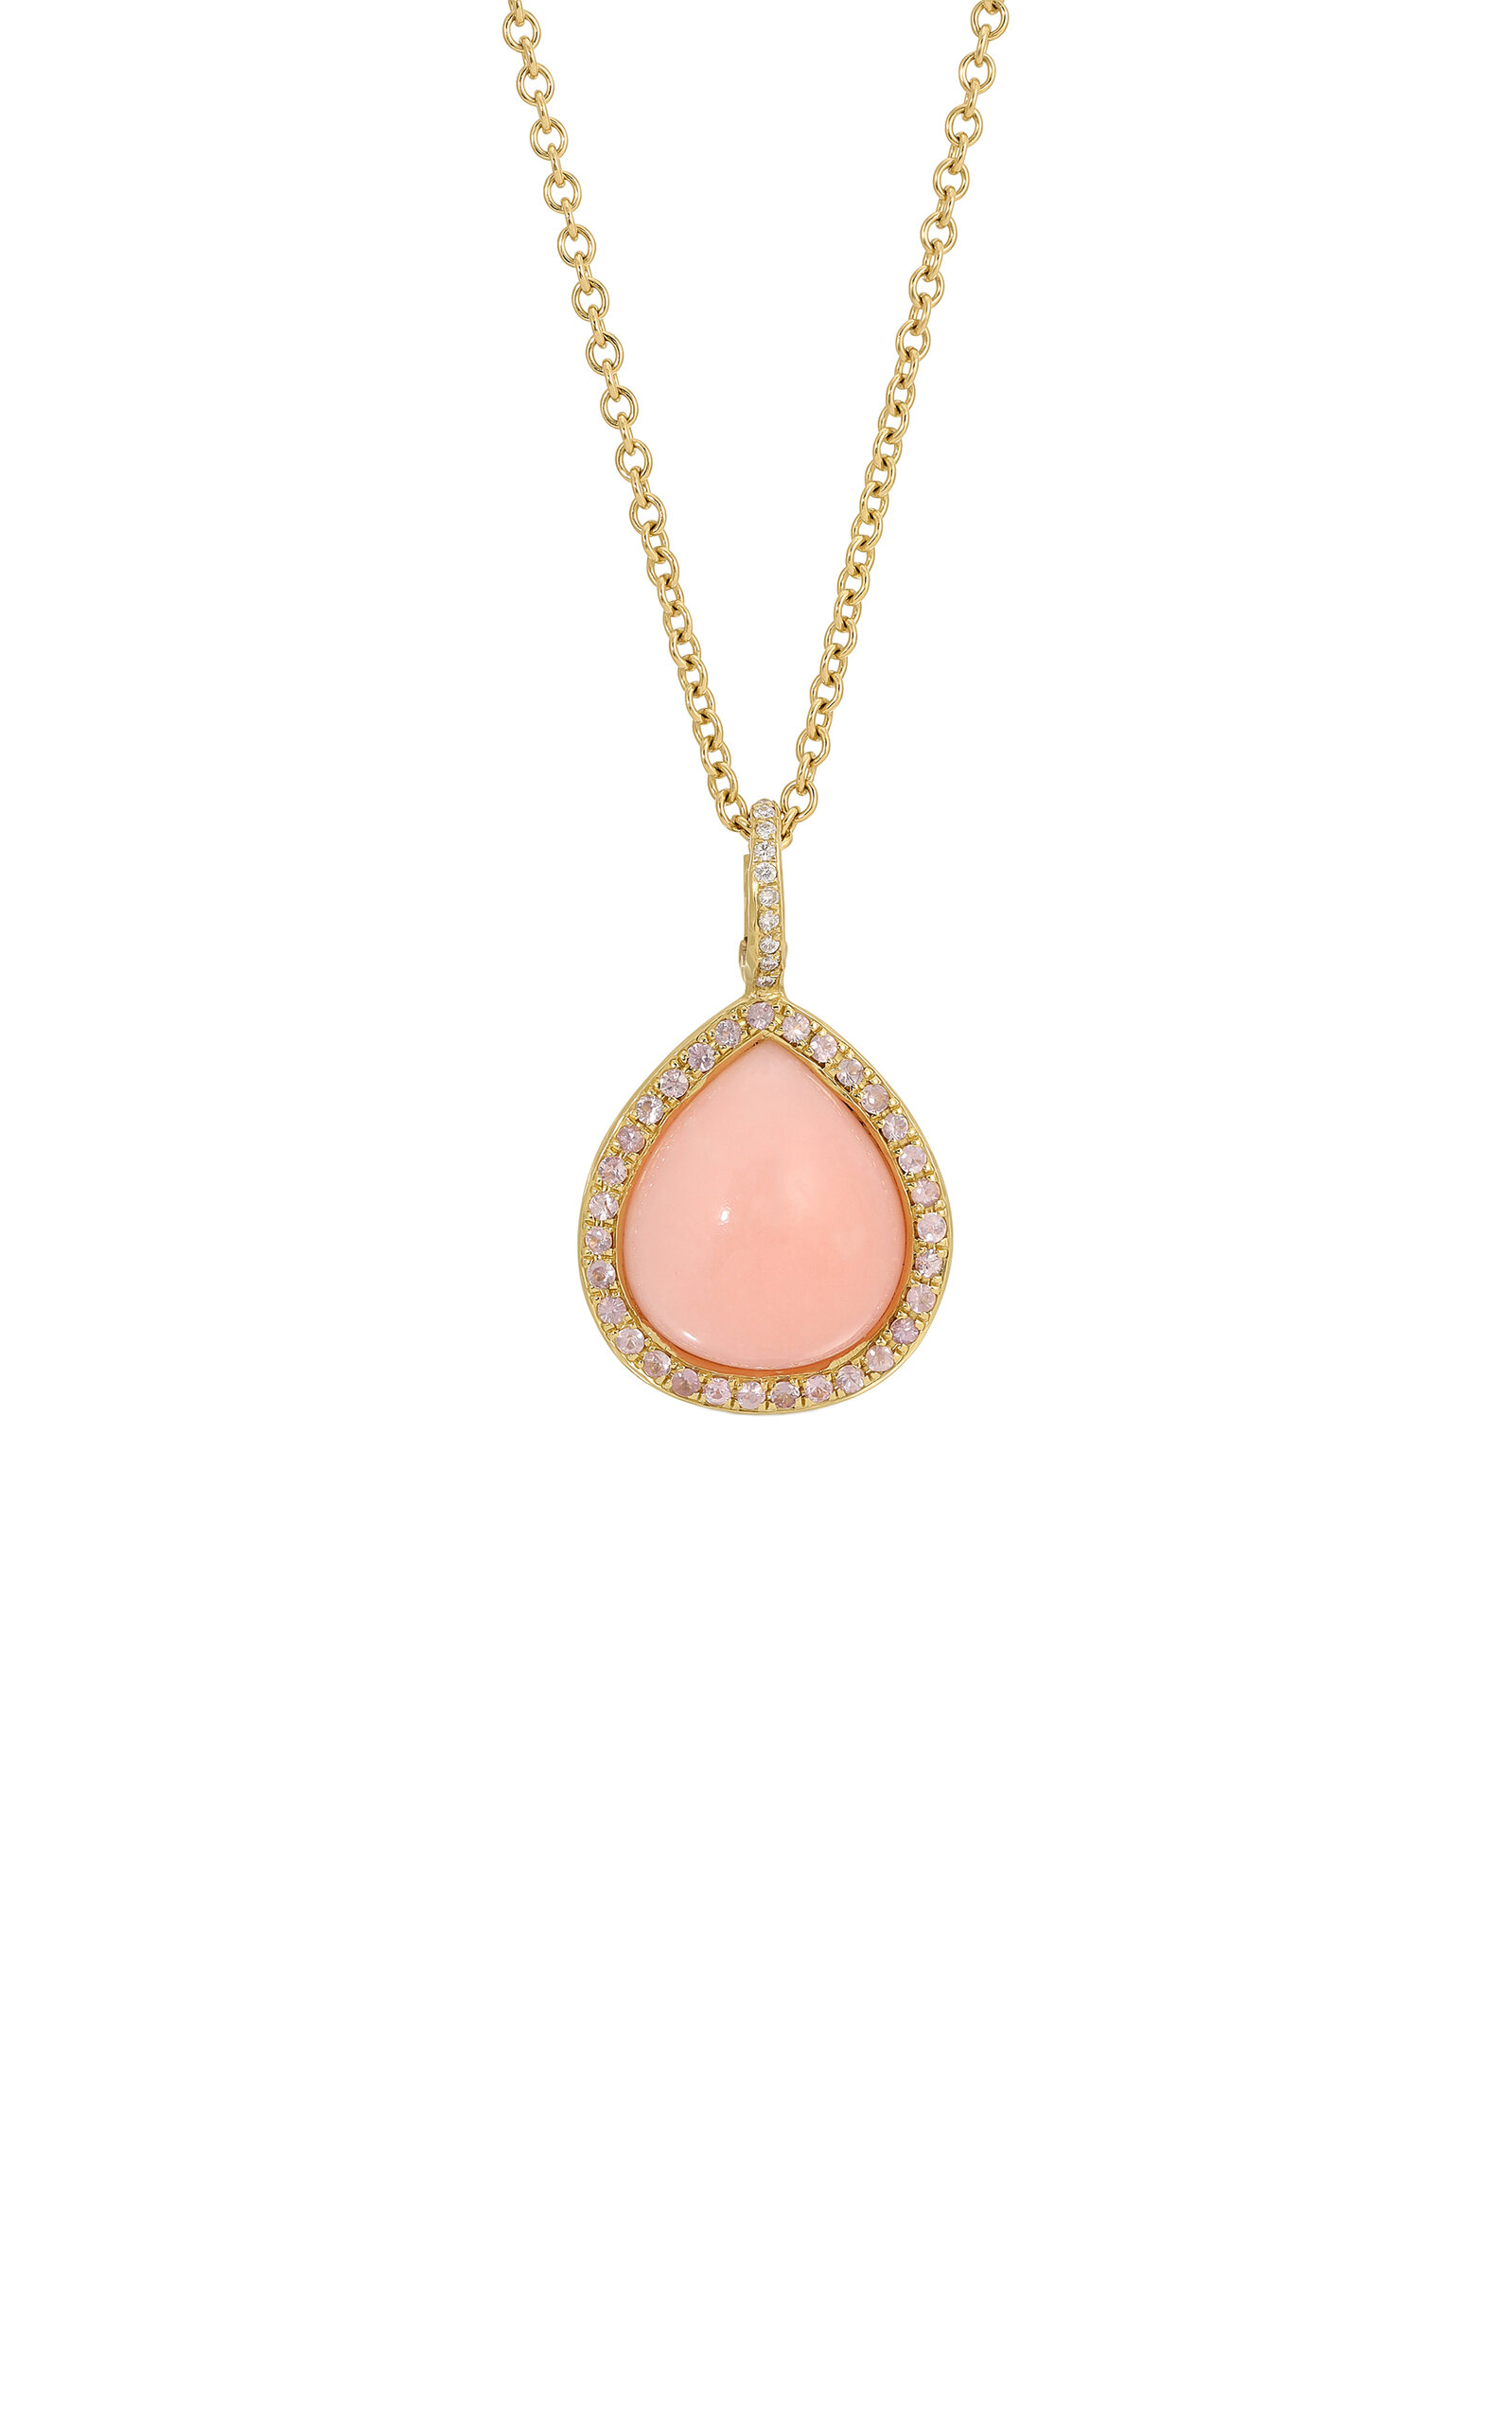 Octavia Elizabeth 18k Yellow Gold Pear Shaped Pink Opal Diamond Necklace